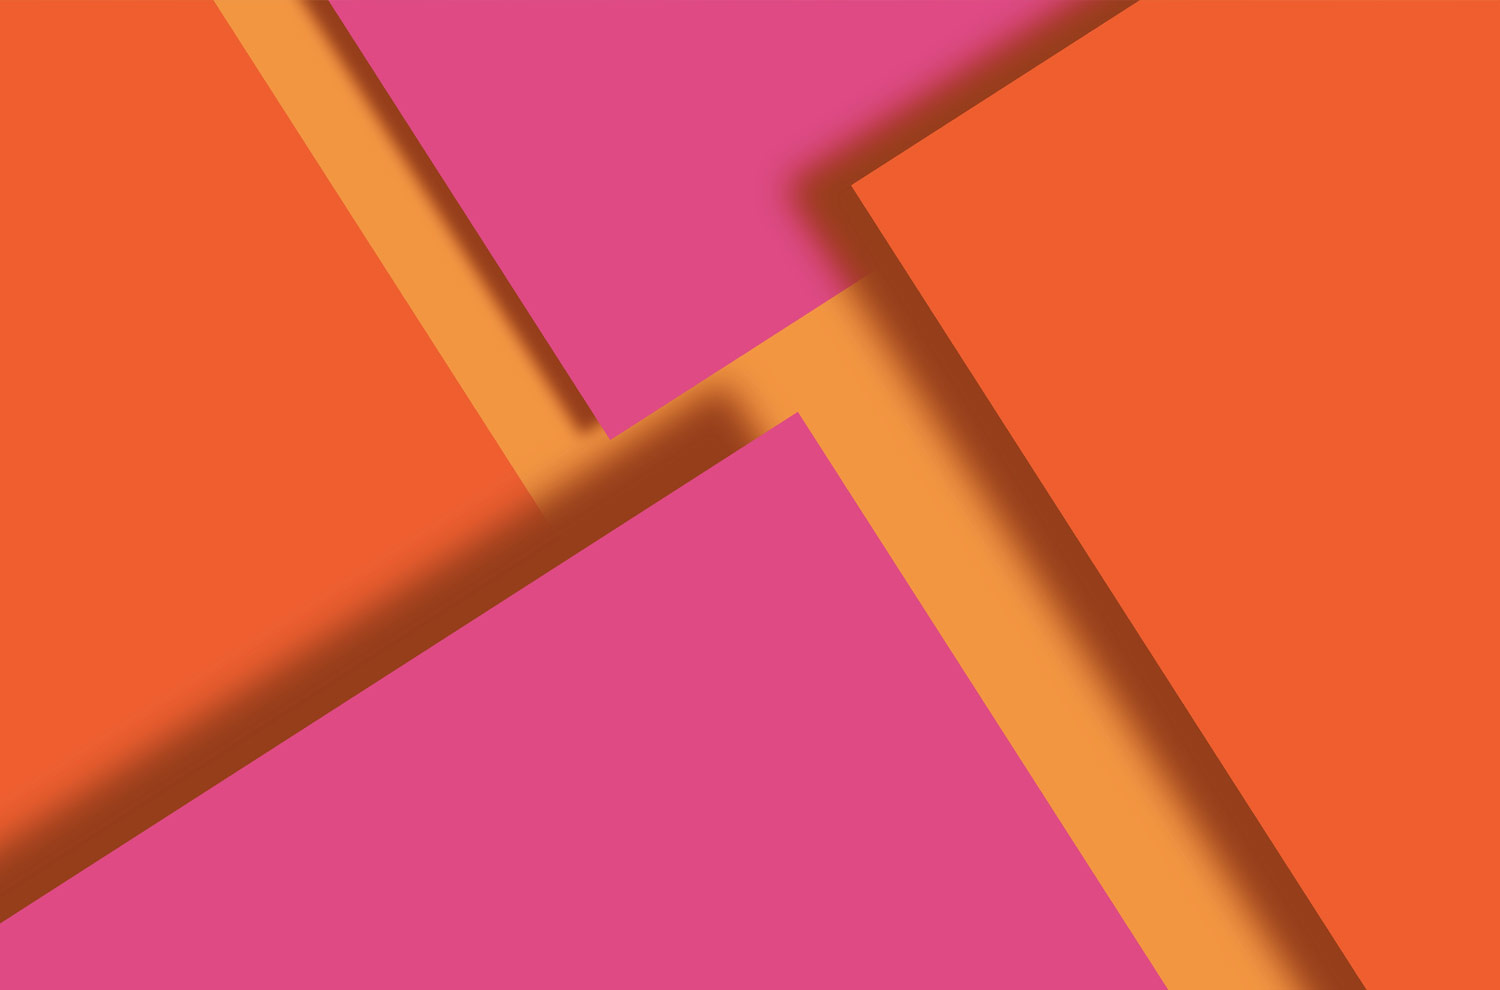 Orange and pink shapes